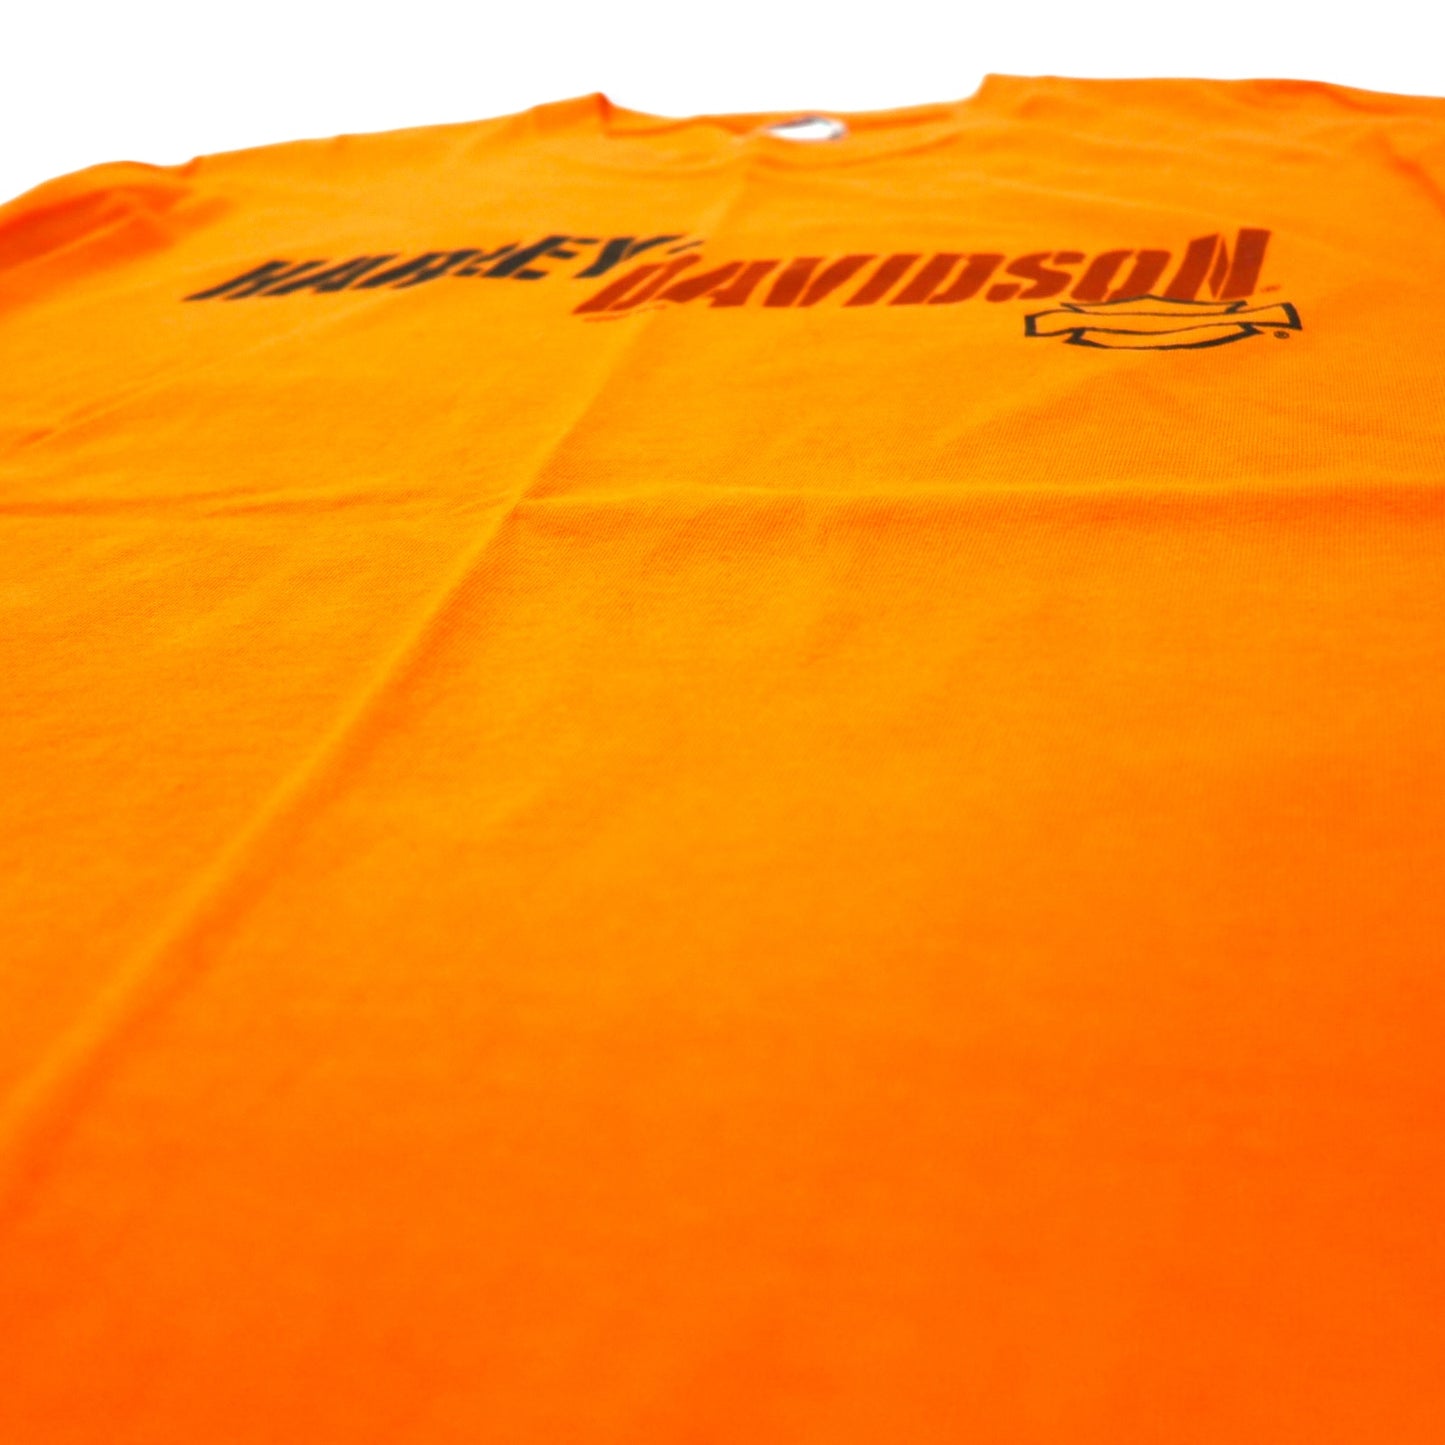 HARLEY DAVIDSON USA製 ロゴプリント Tシャツ L オレンジ コットン SMITH BROTHERS 両面プリント Hanes BEEFY-T